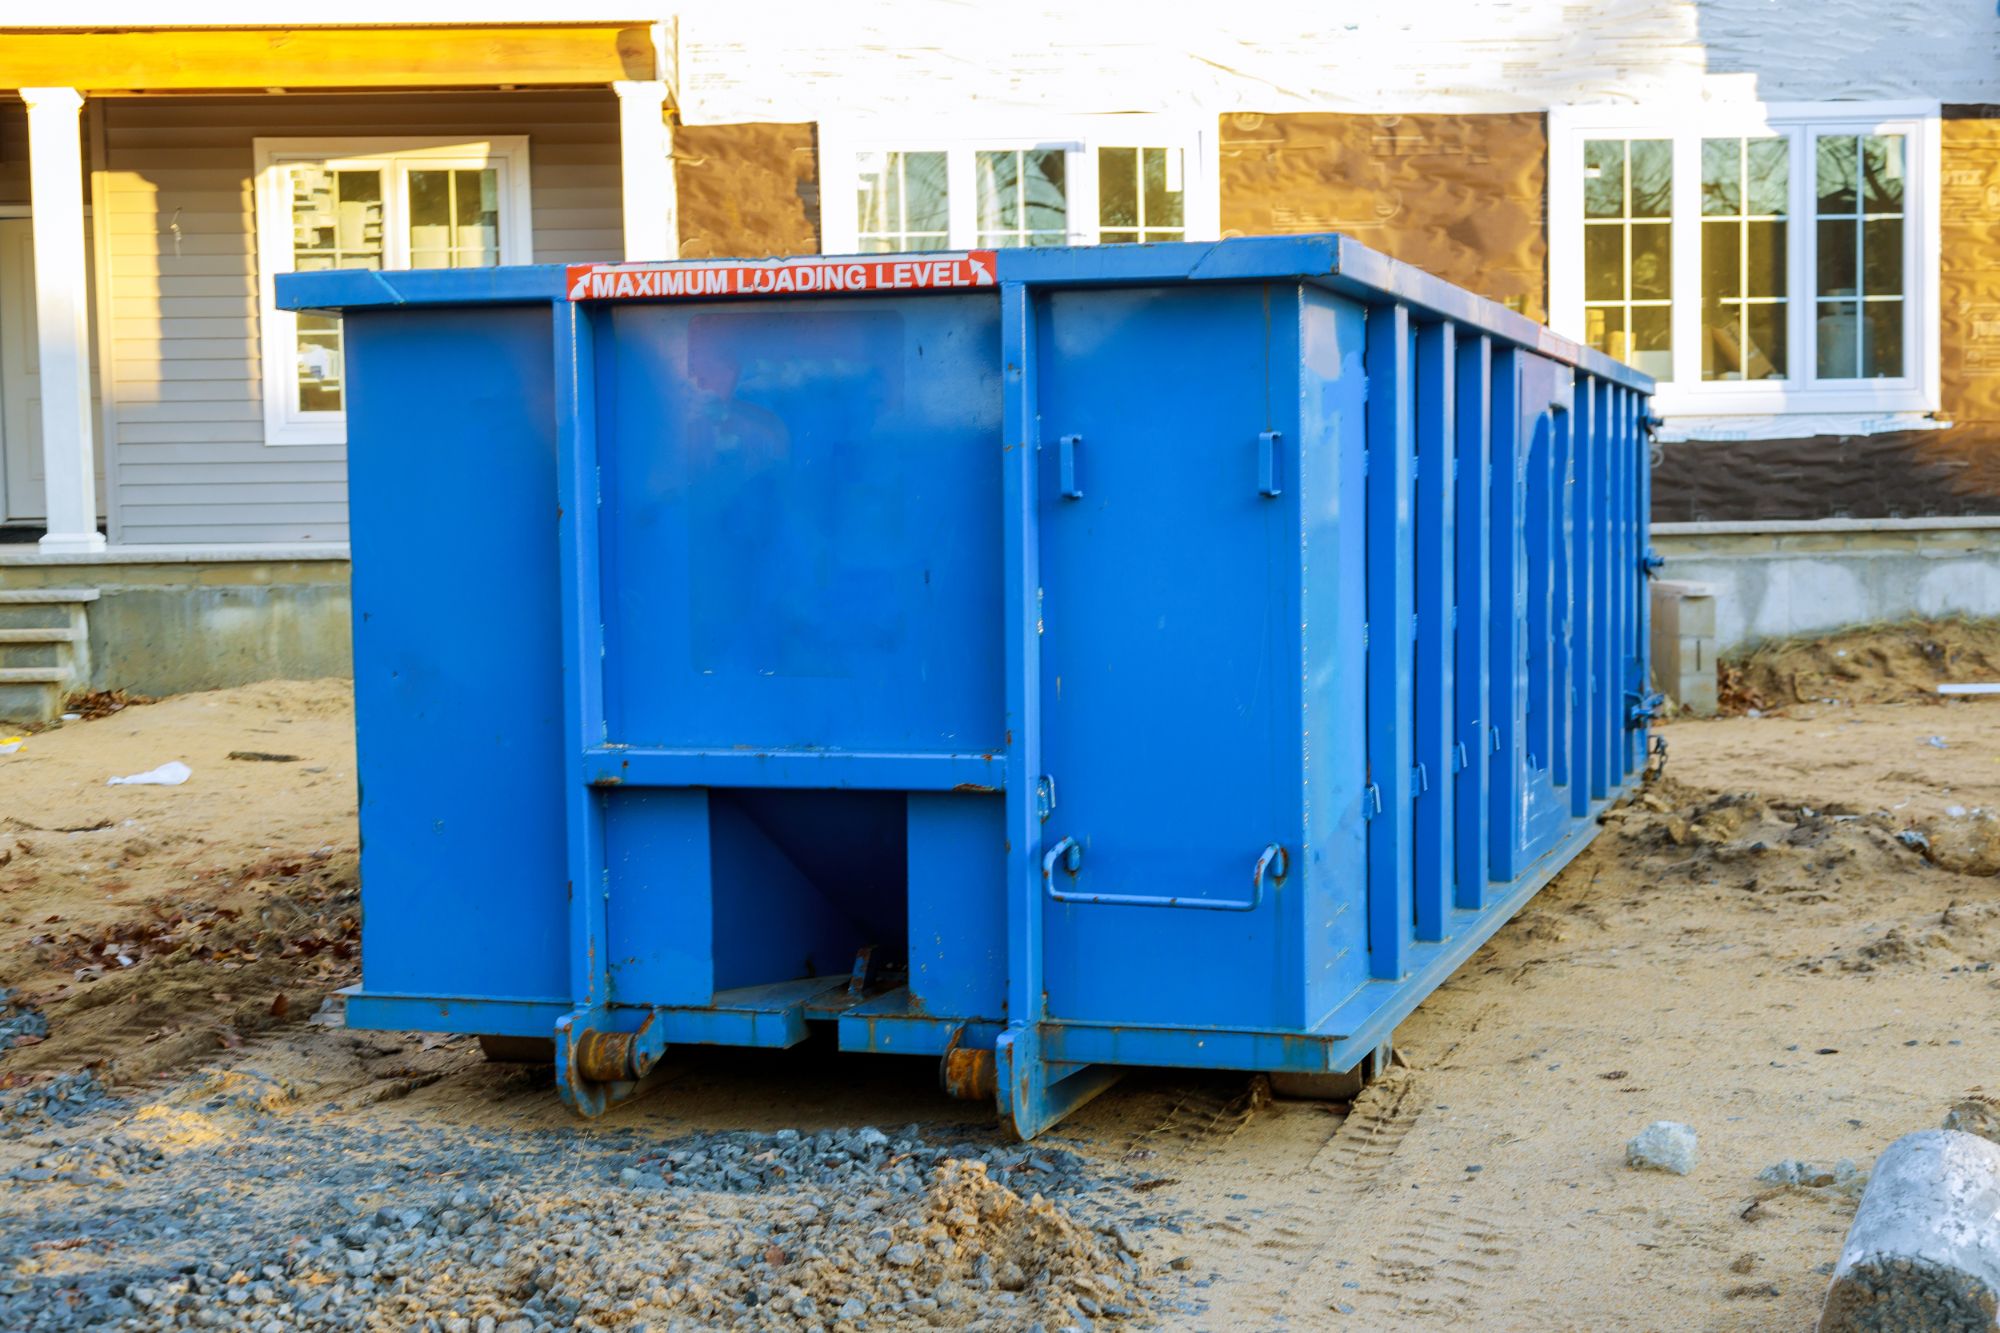 dumpster rentals - dumpster size - rent a dumpster